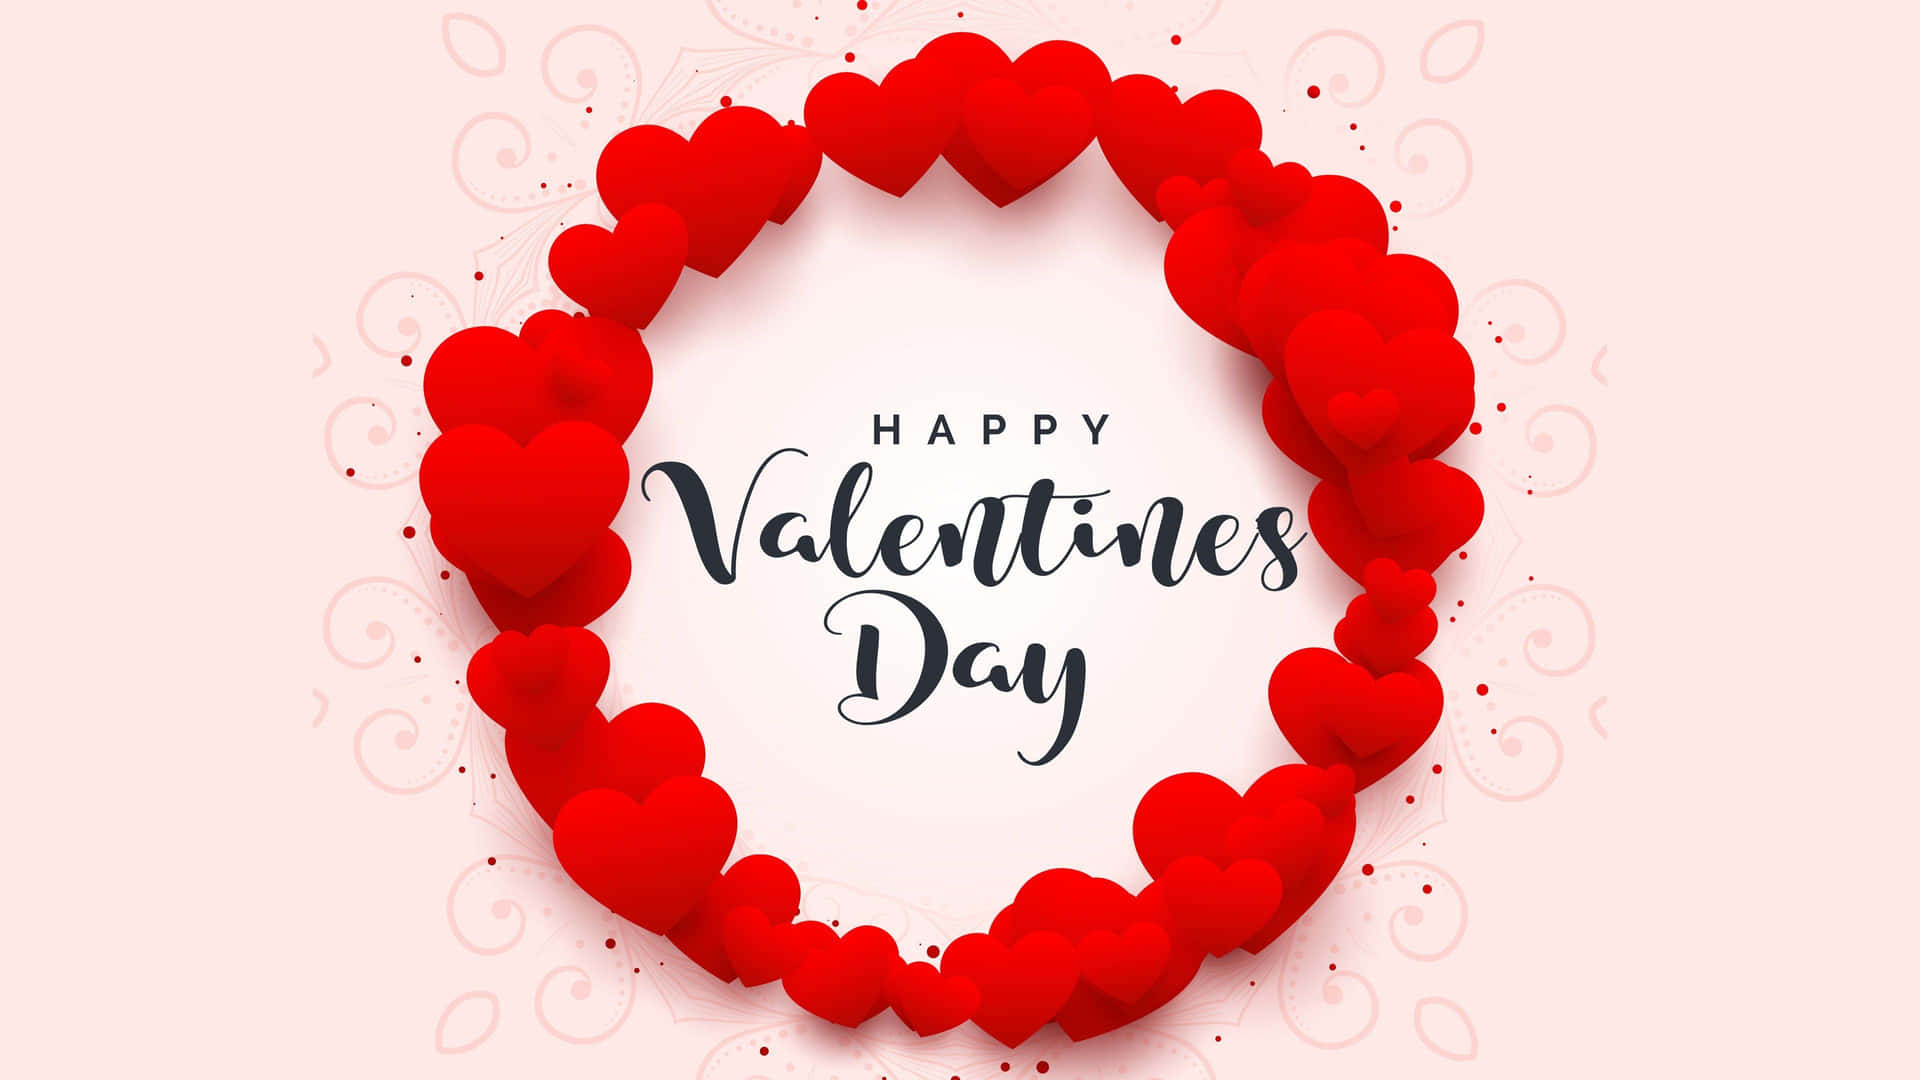 Spread Love This Valentine's Day